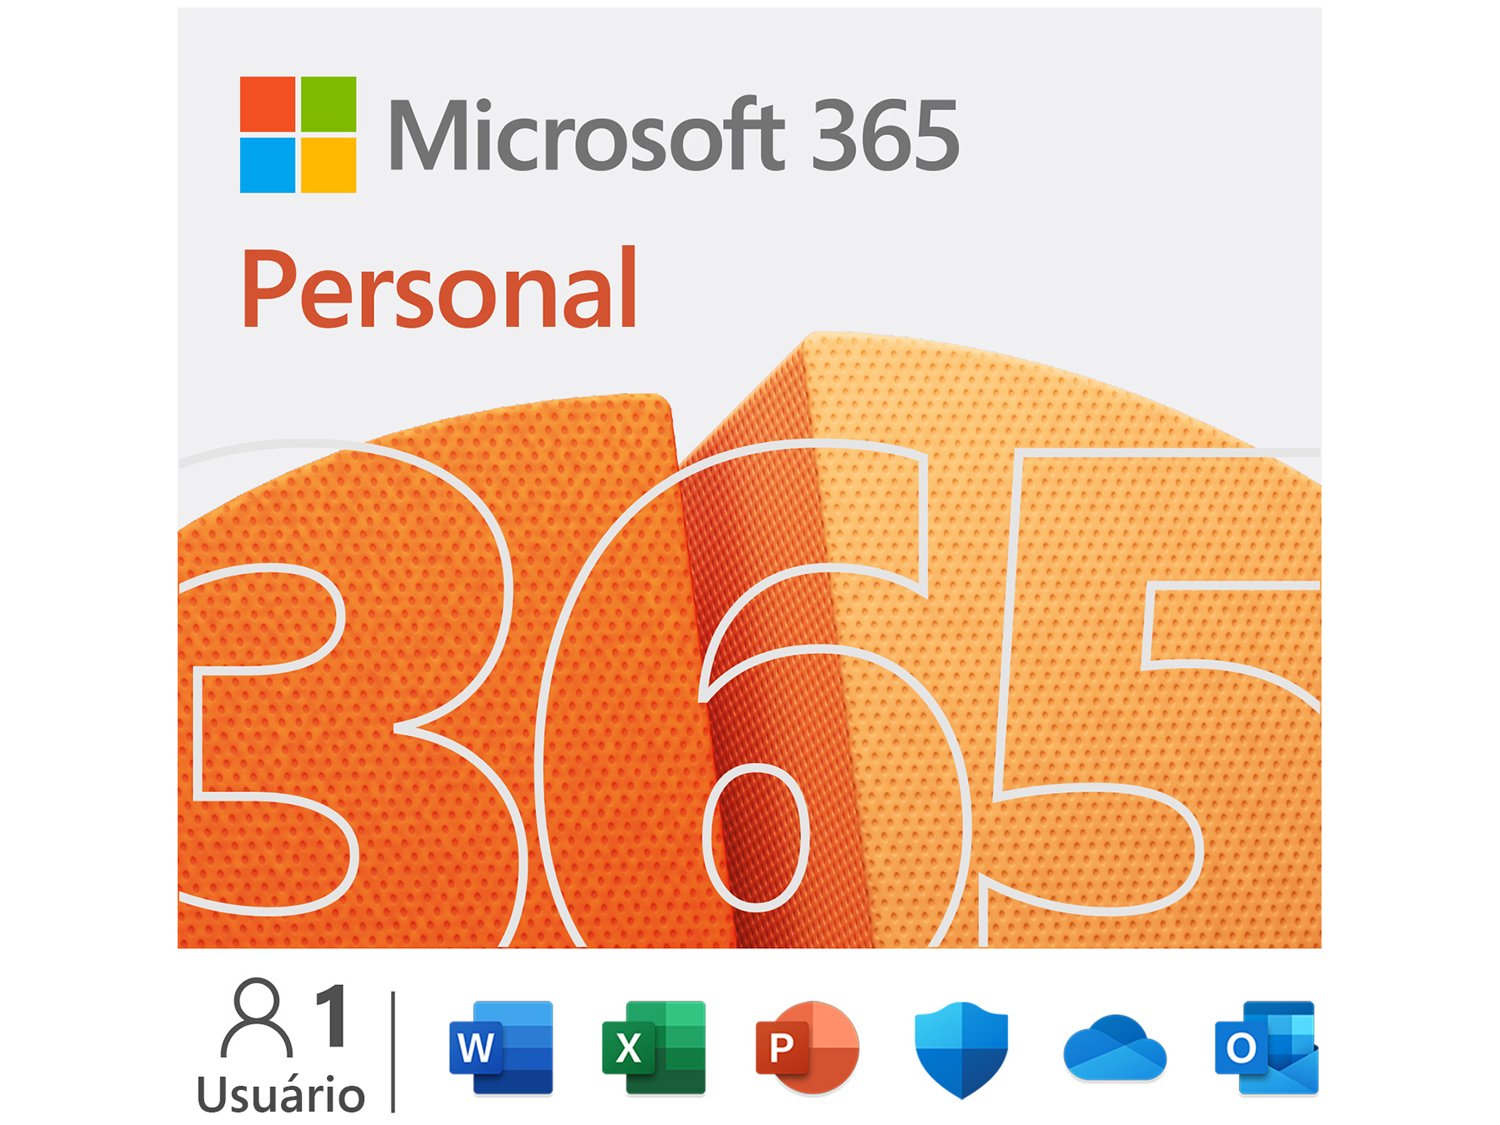 Microsoft 365 Personal Office 365 apps 1TB - 1 Usuário Assinatura Anual - 1